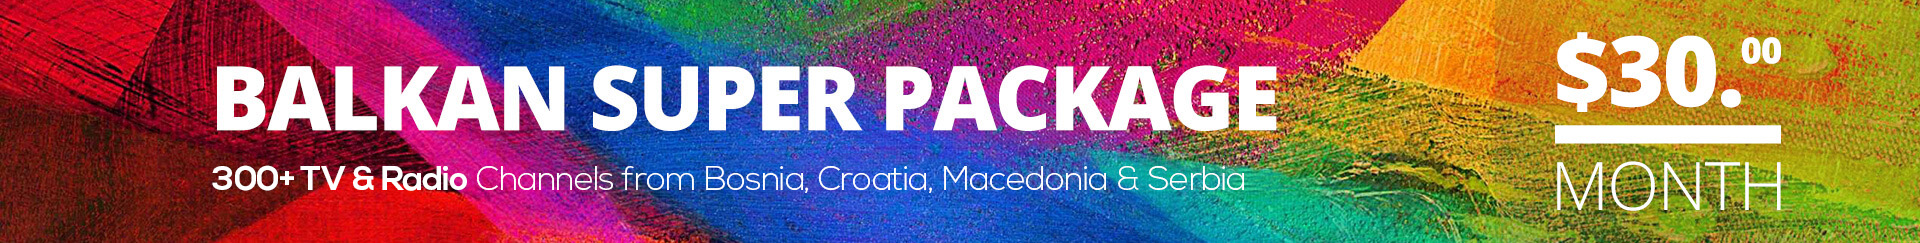 Balkan Super Package TV Banner